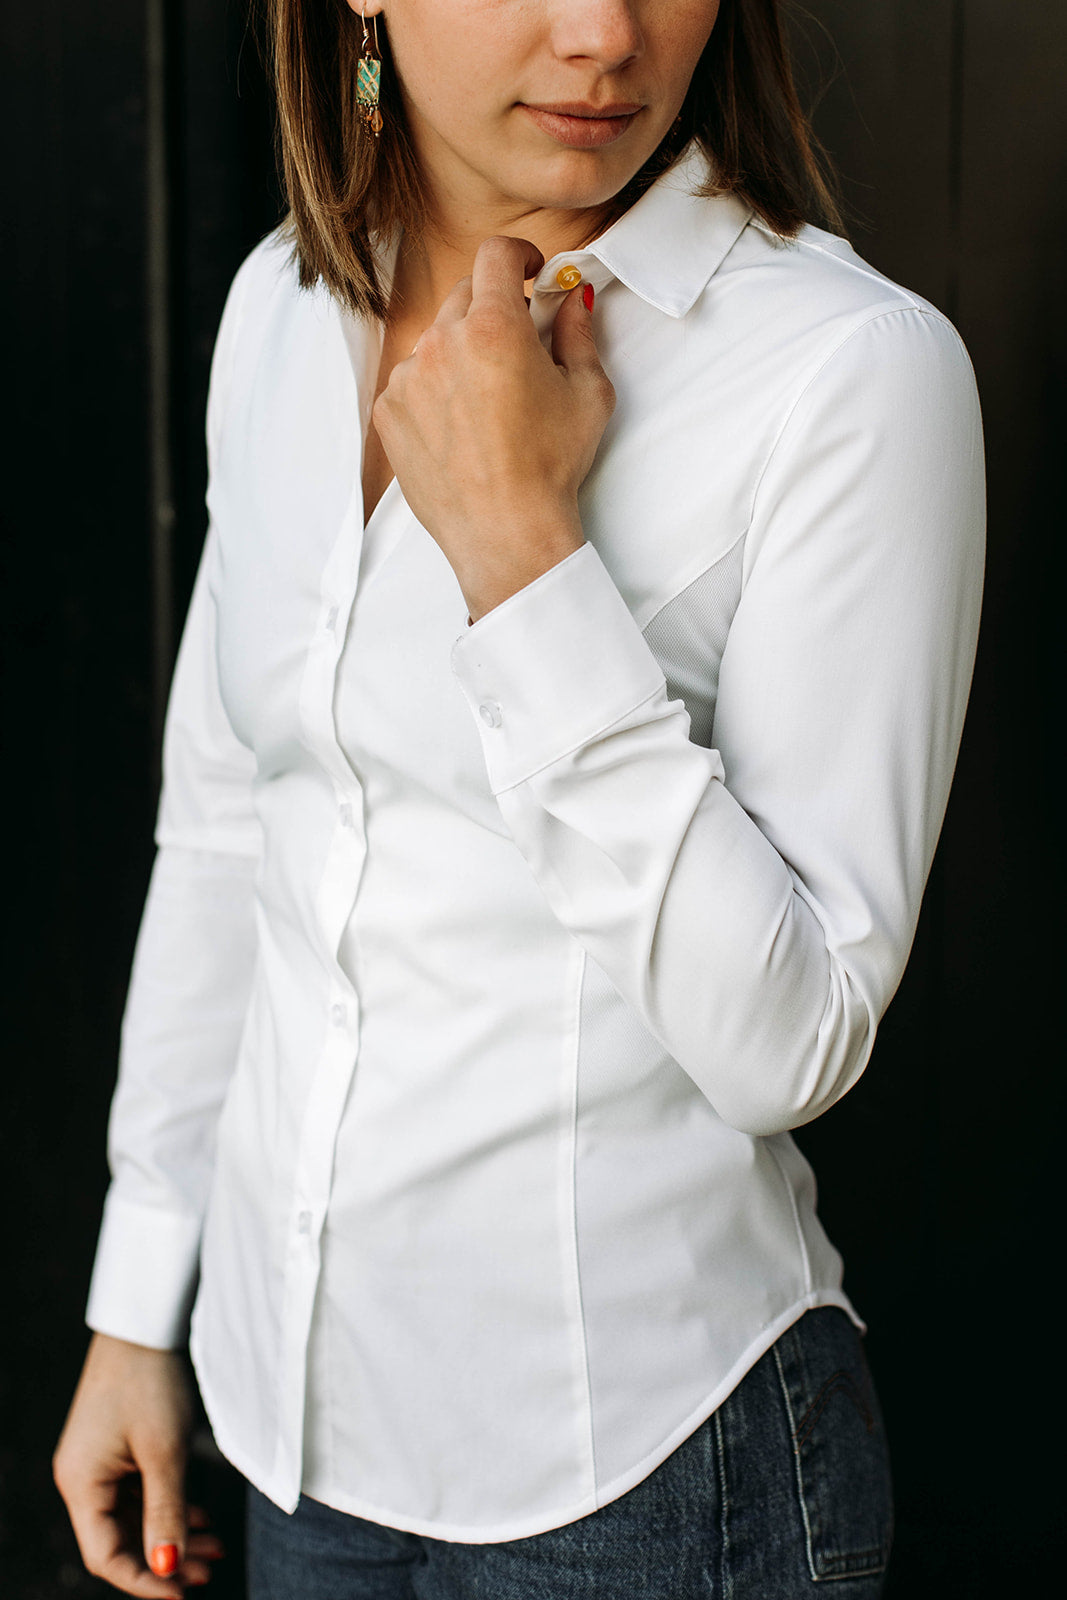 The side of a model wearing a white sweatproof dress shirt for women